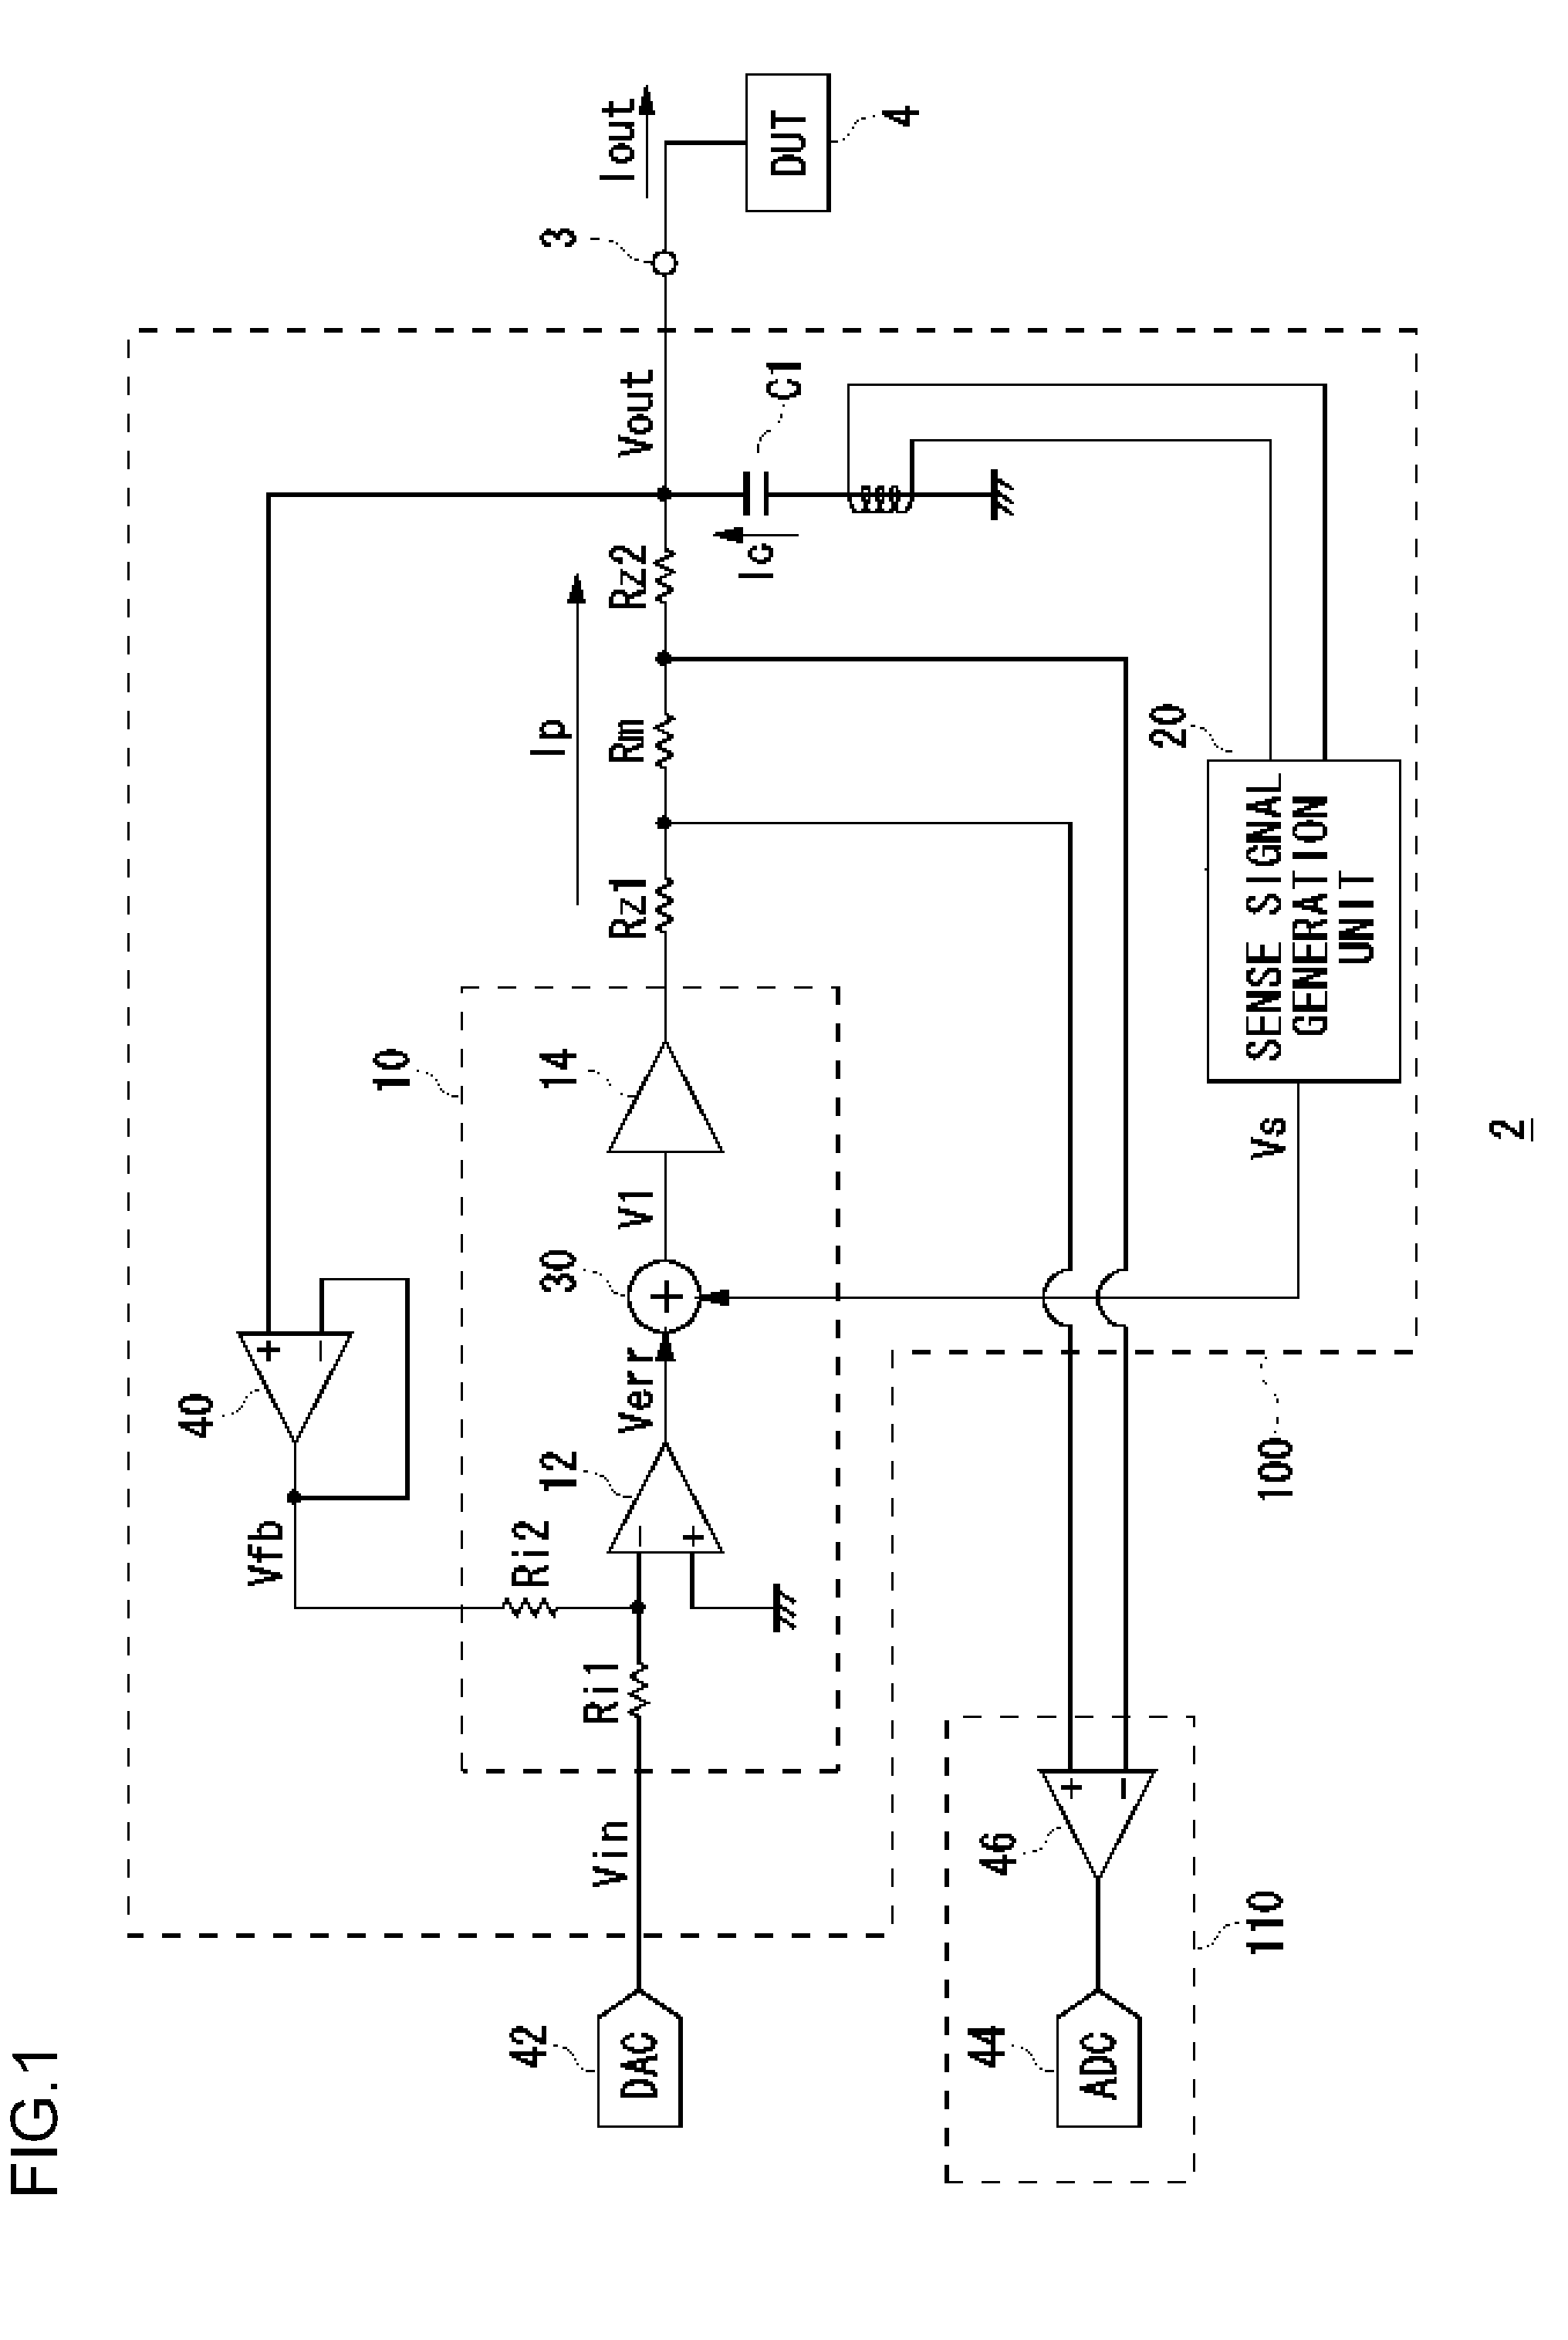 Voltage generating apparatus